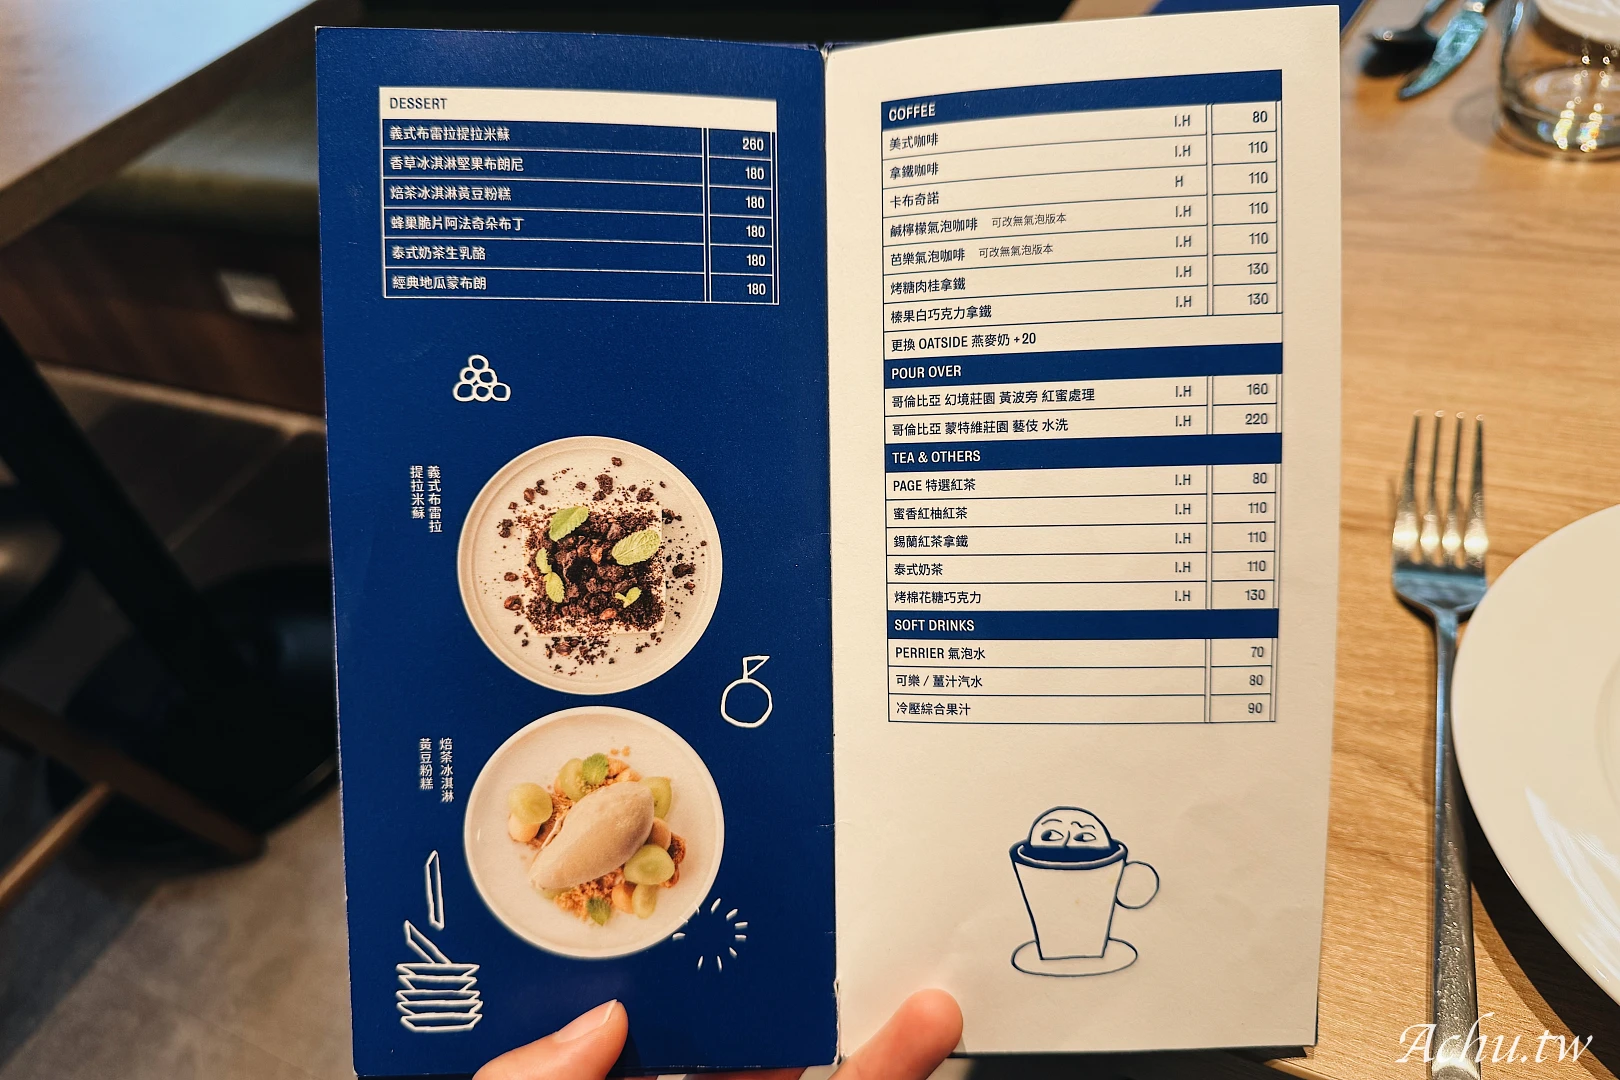 PAGE IN LAB menu